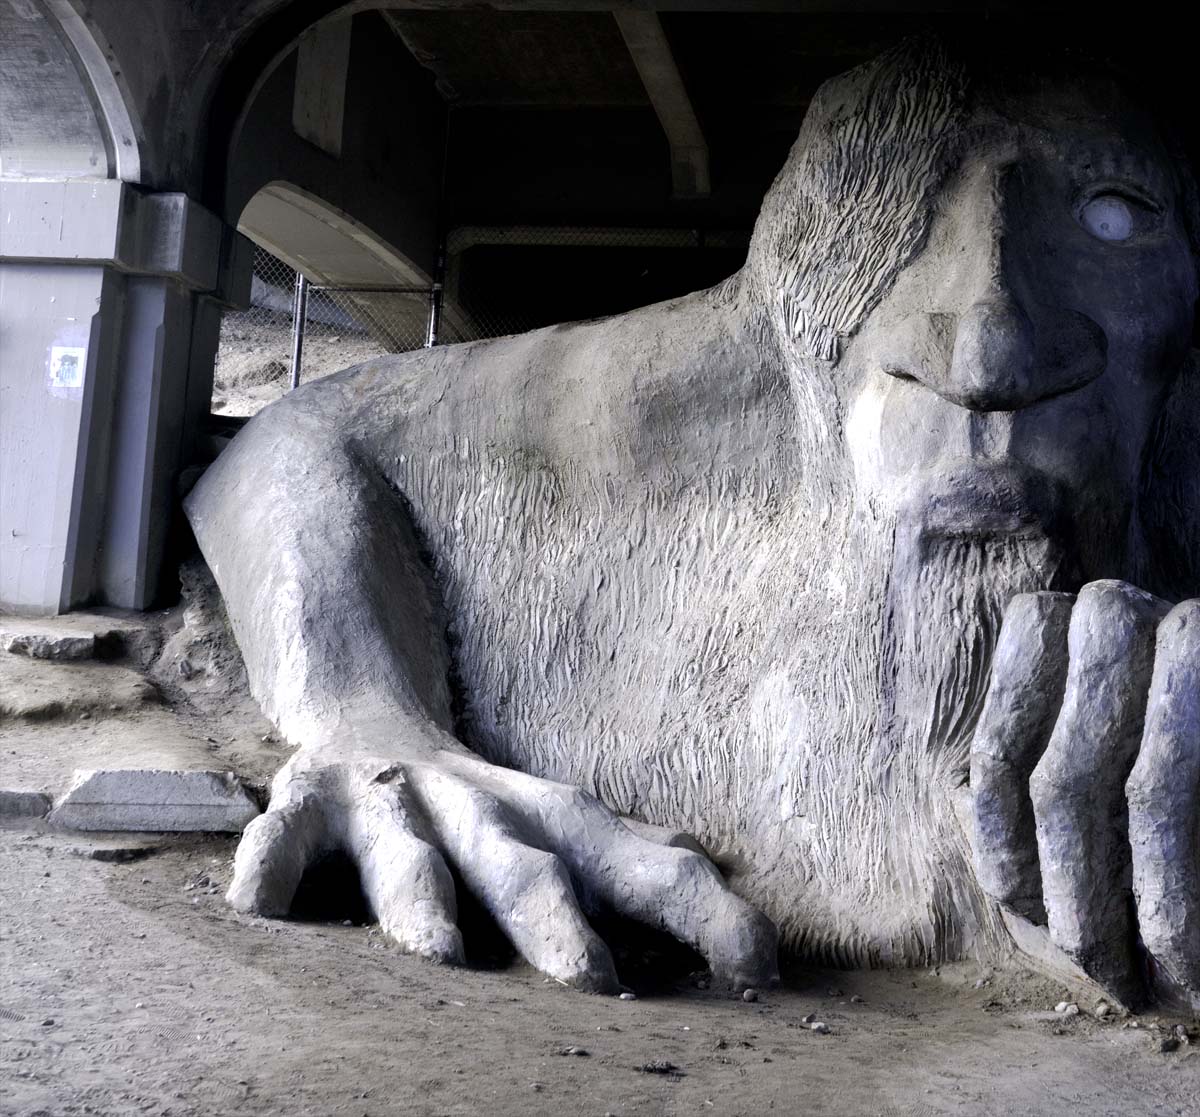 Fremont Troll sculpture